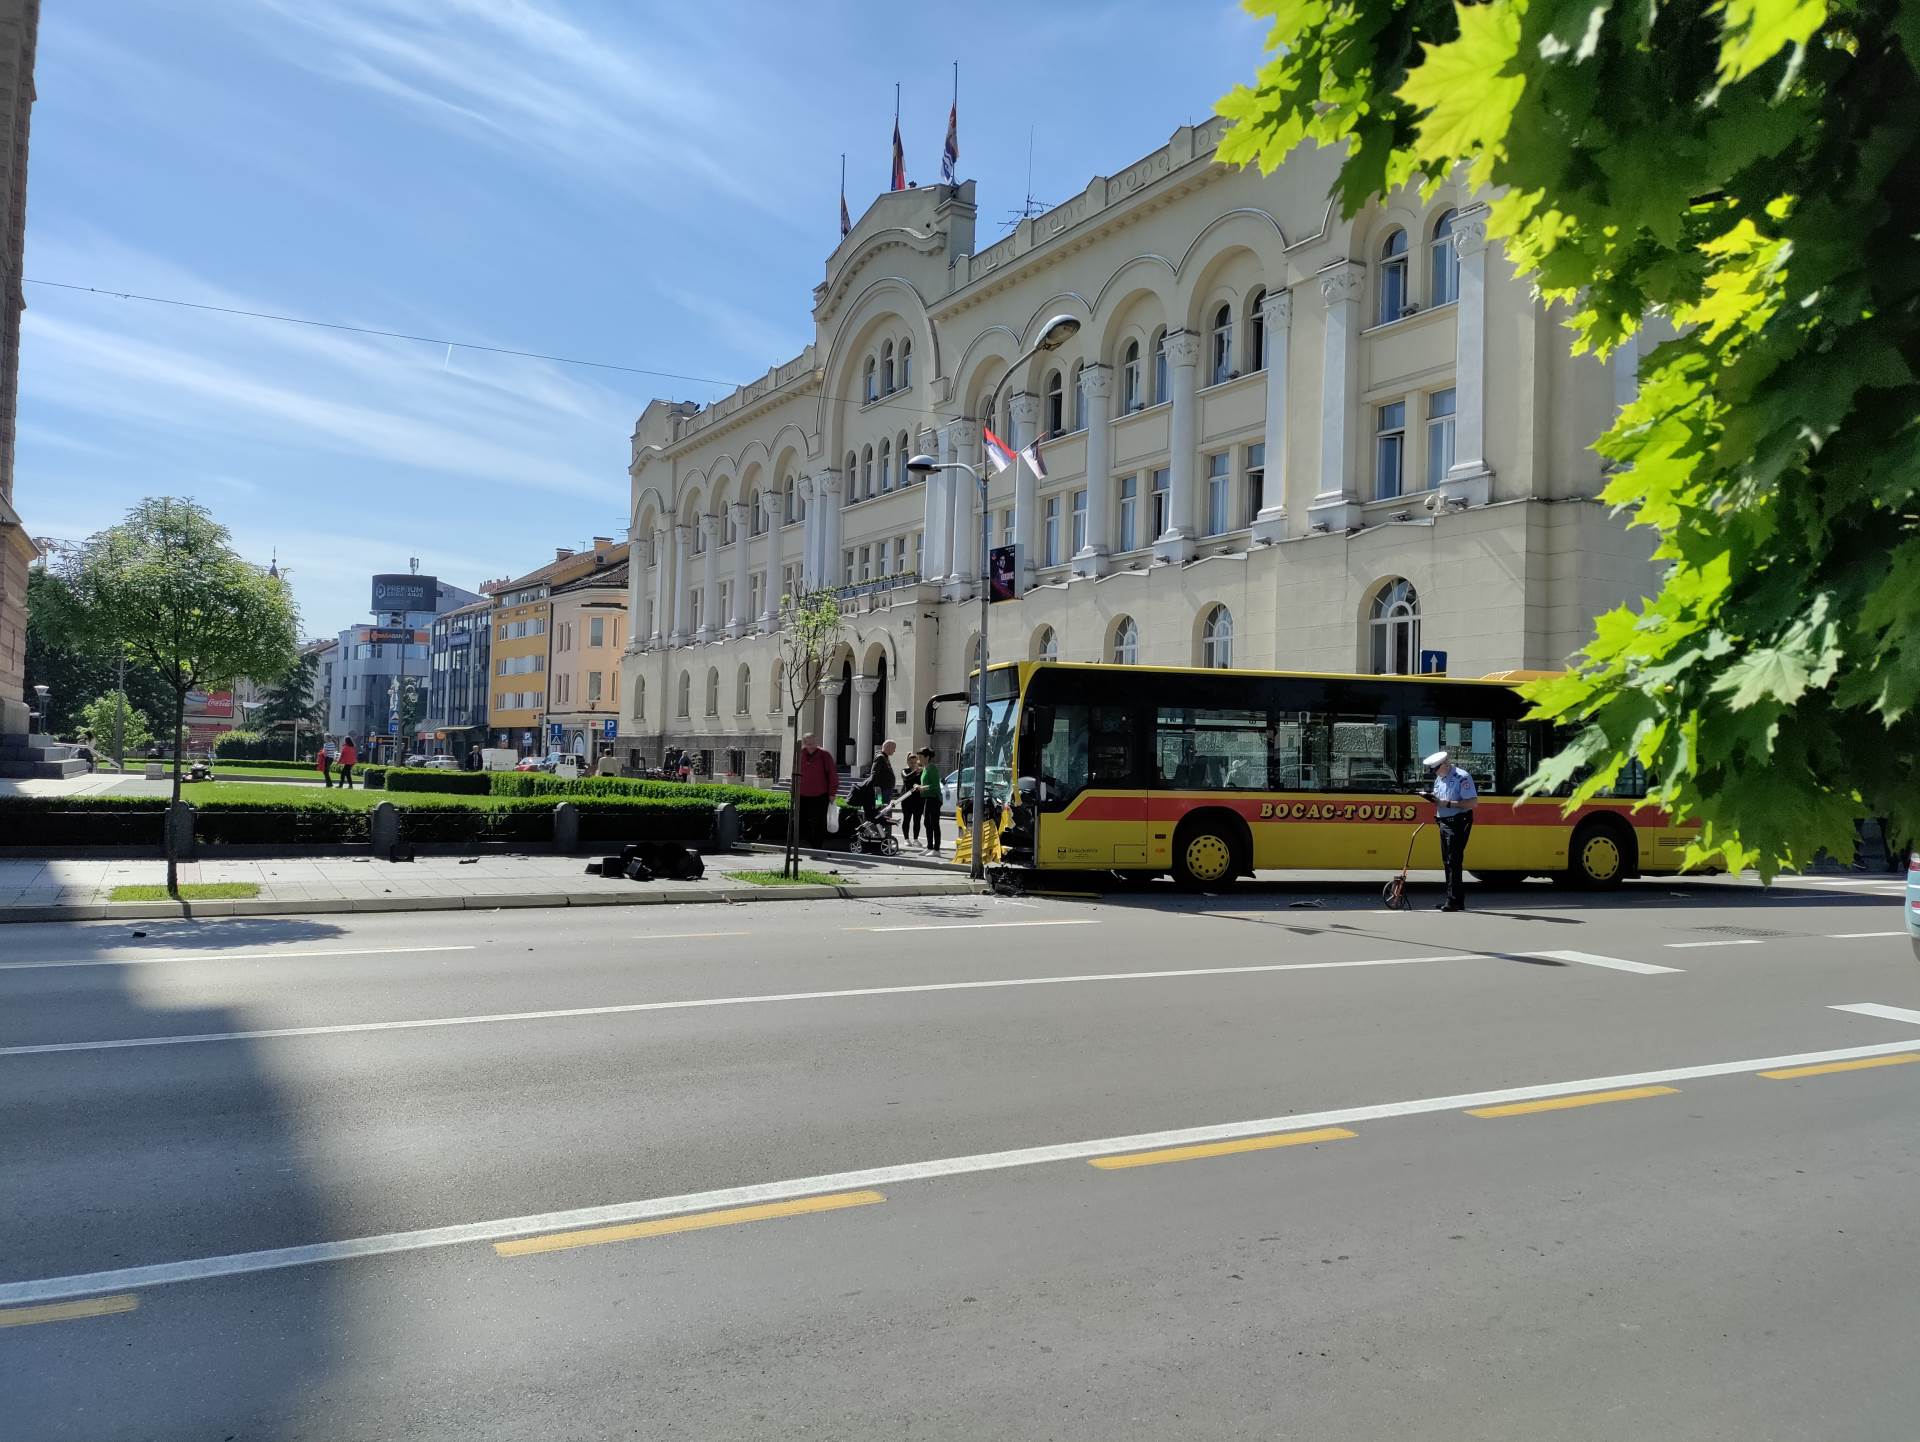  Sudar gradskog autobusa i automobila u Banjaluci 